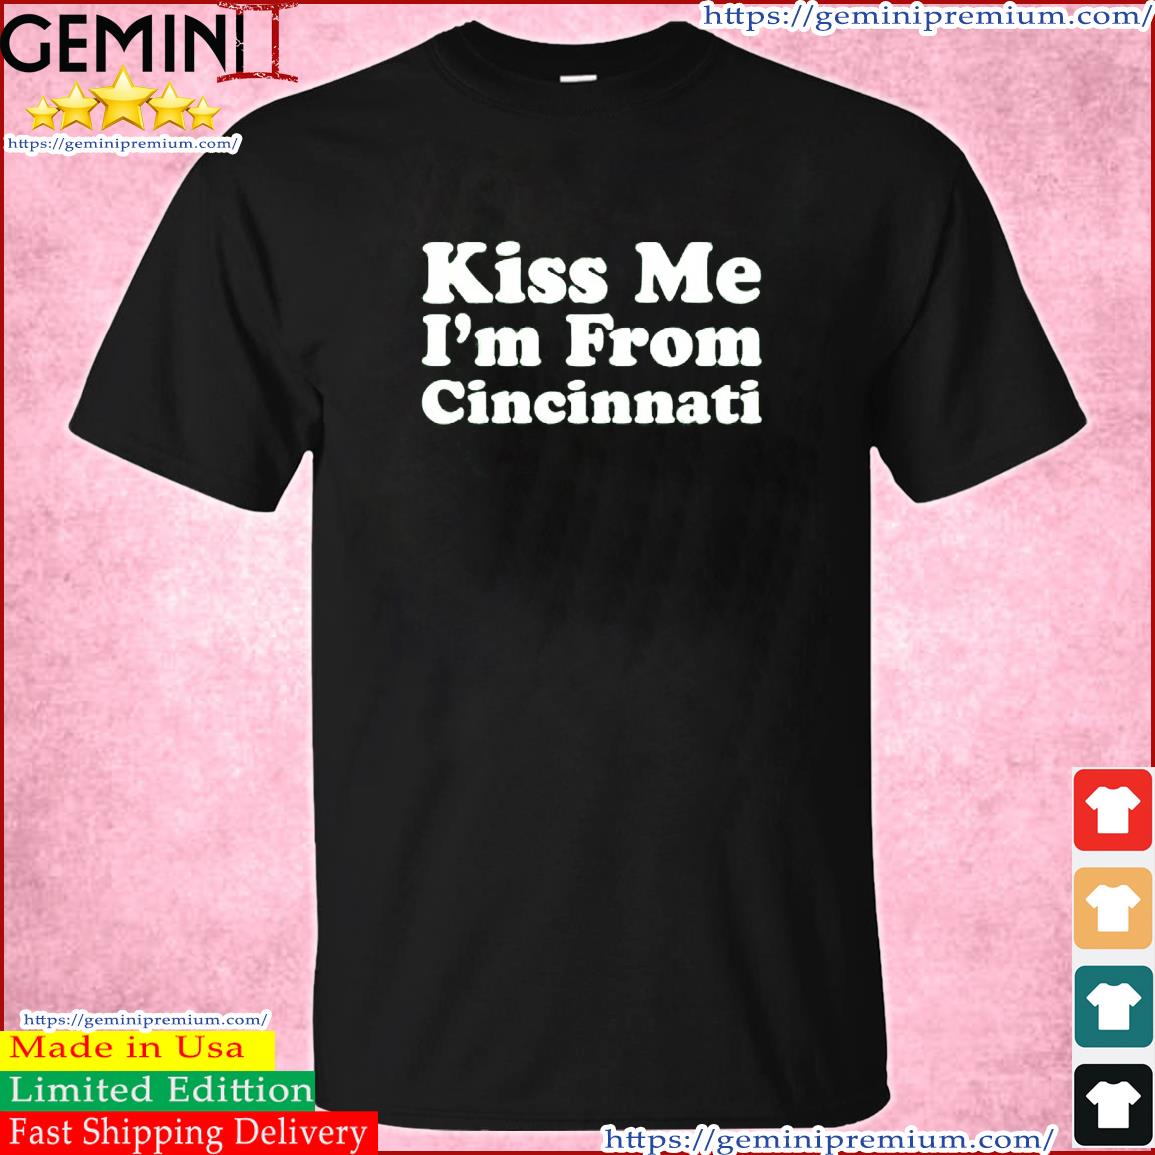 Kiss Me, I'm From Cincinnati Patrick's Day Shirt